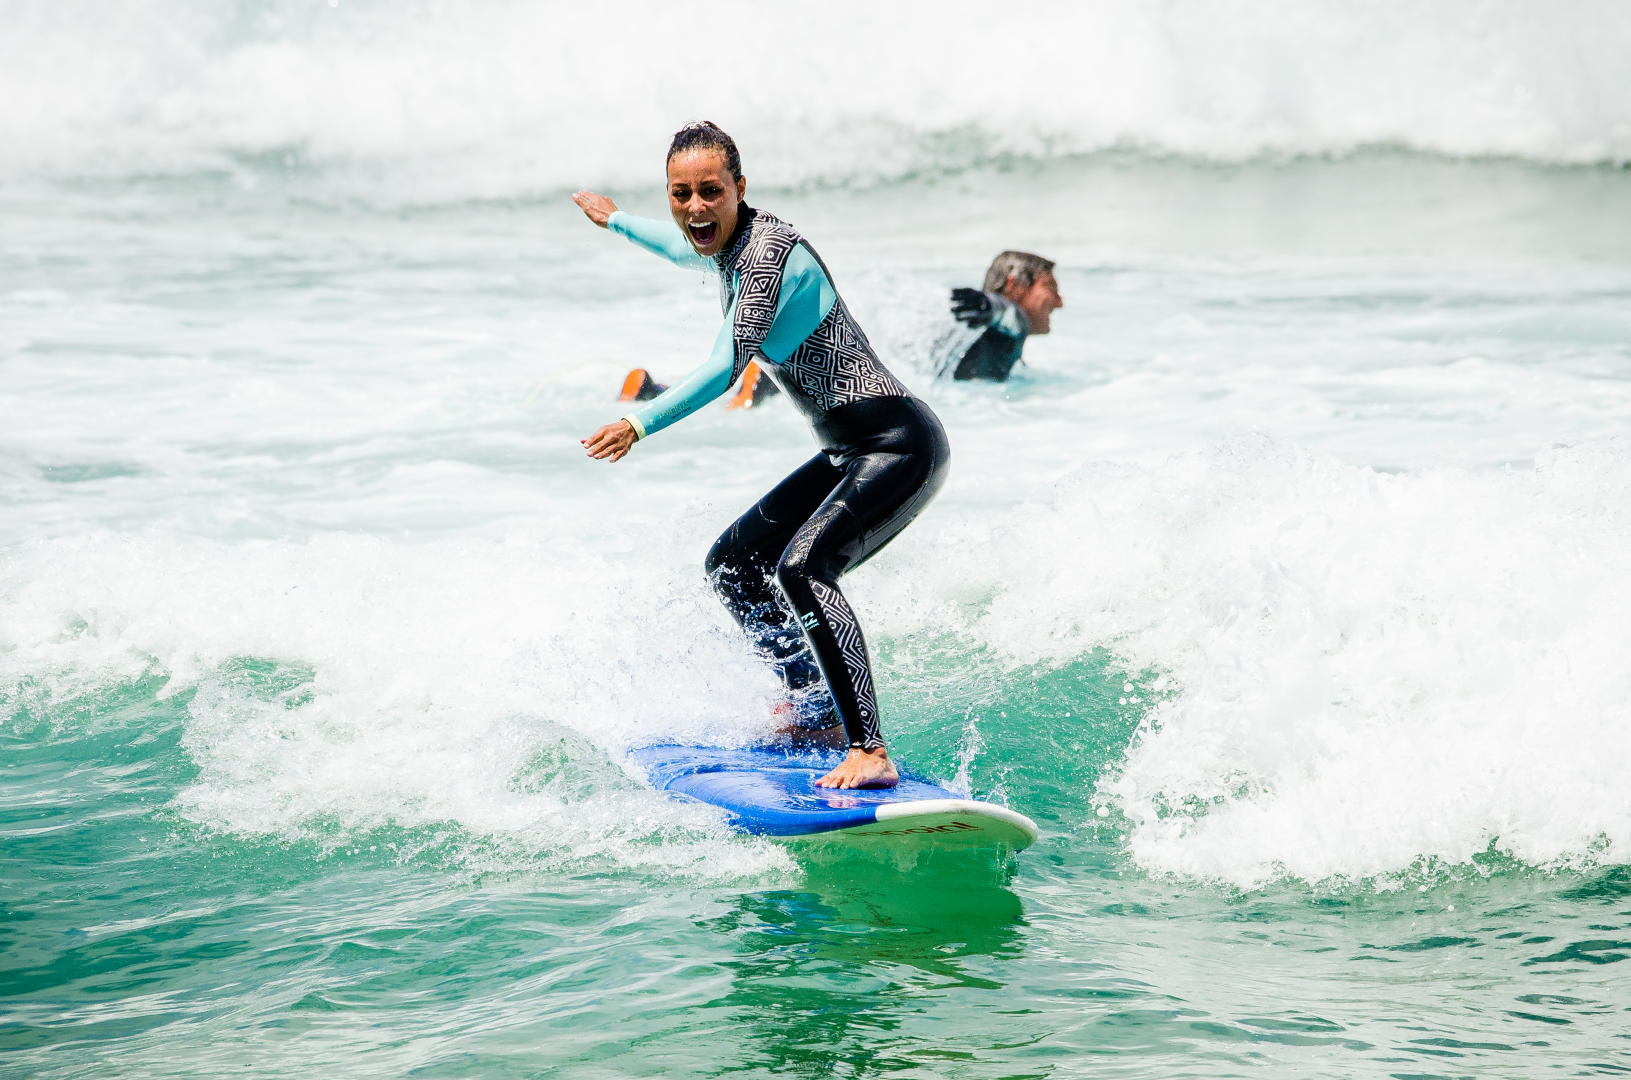 Beginner surfer girl catching wave smiling